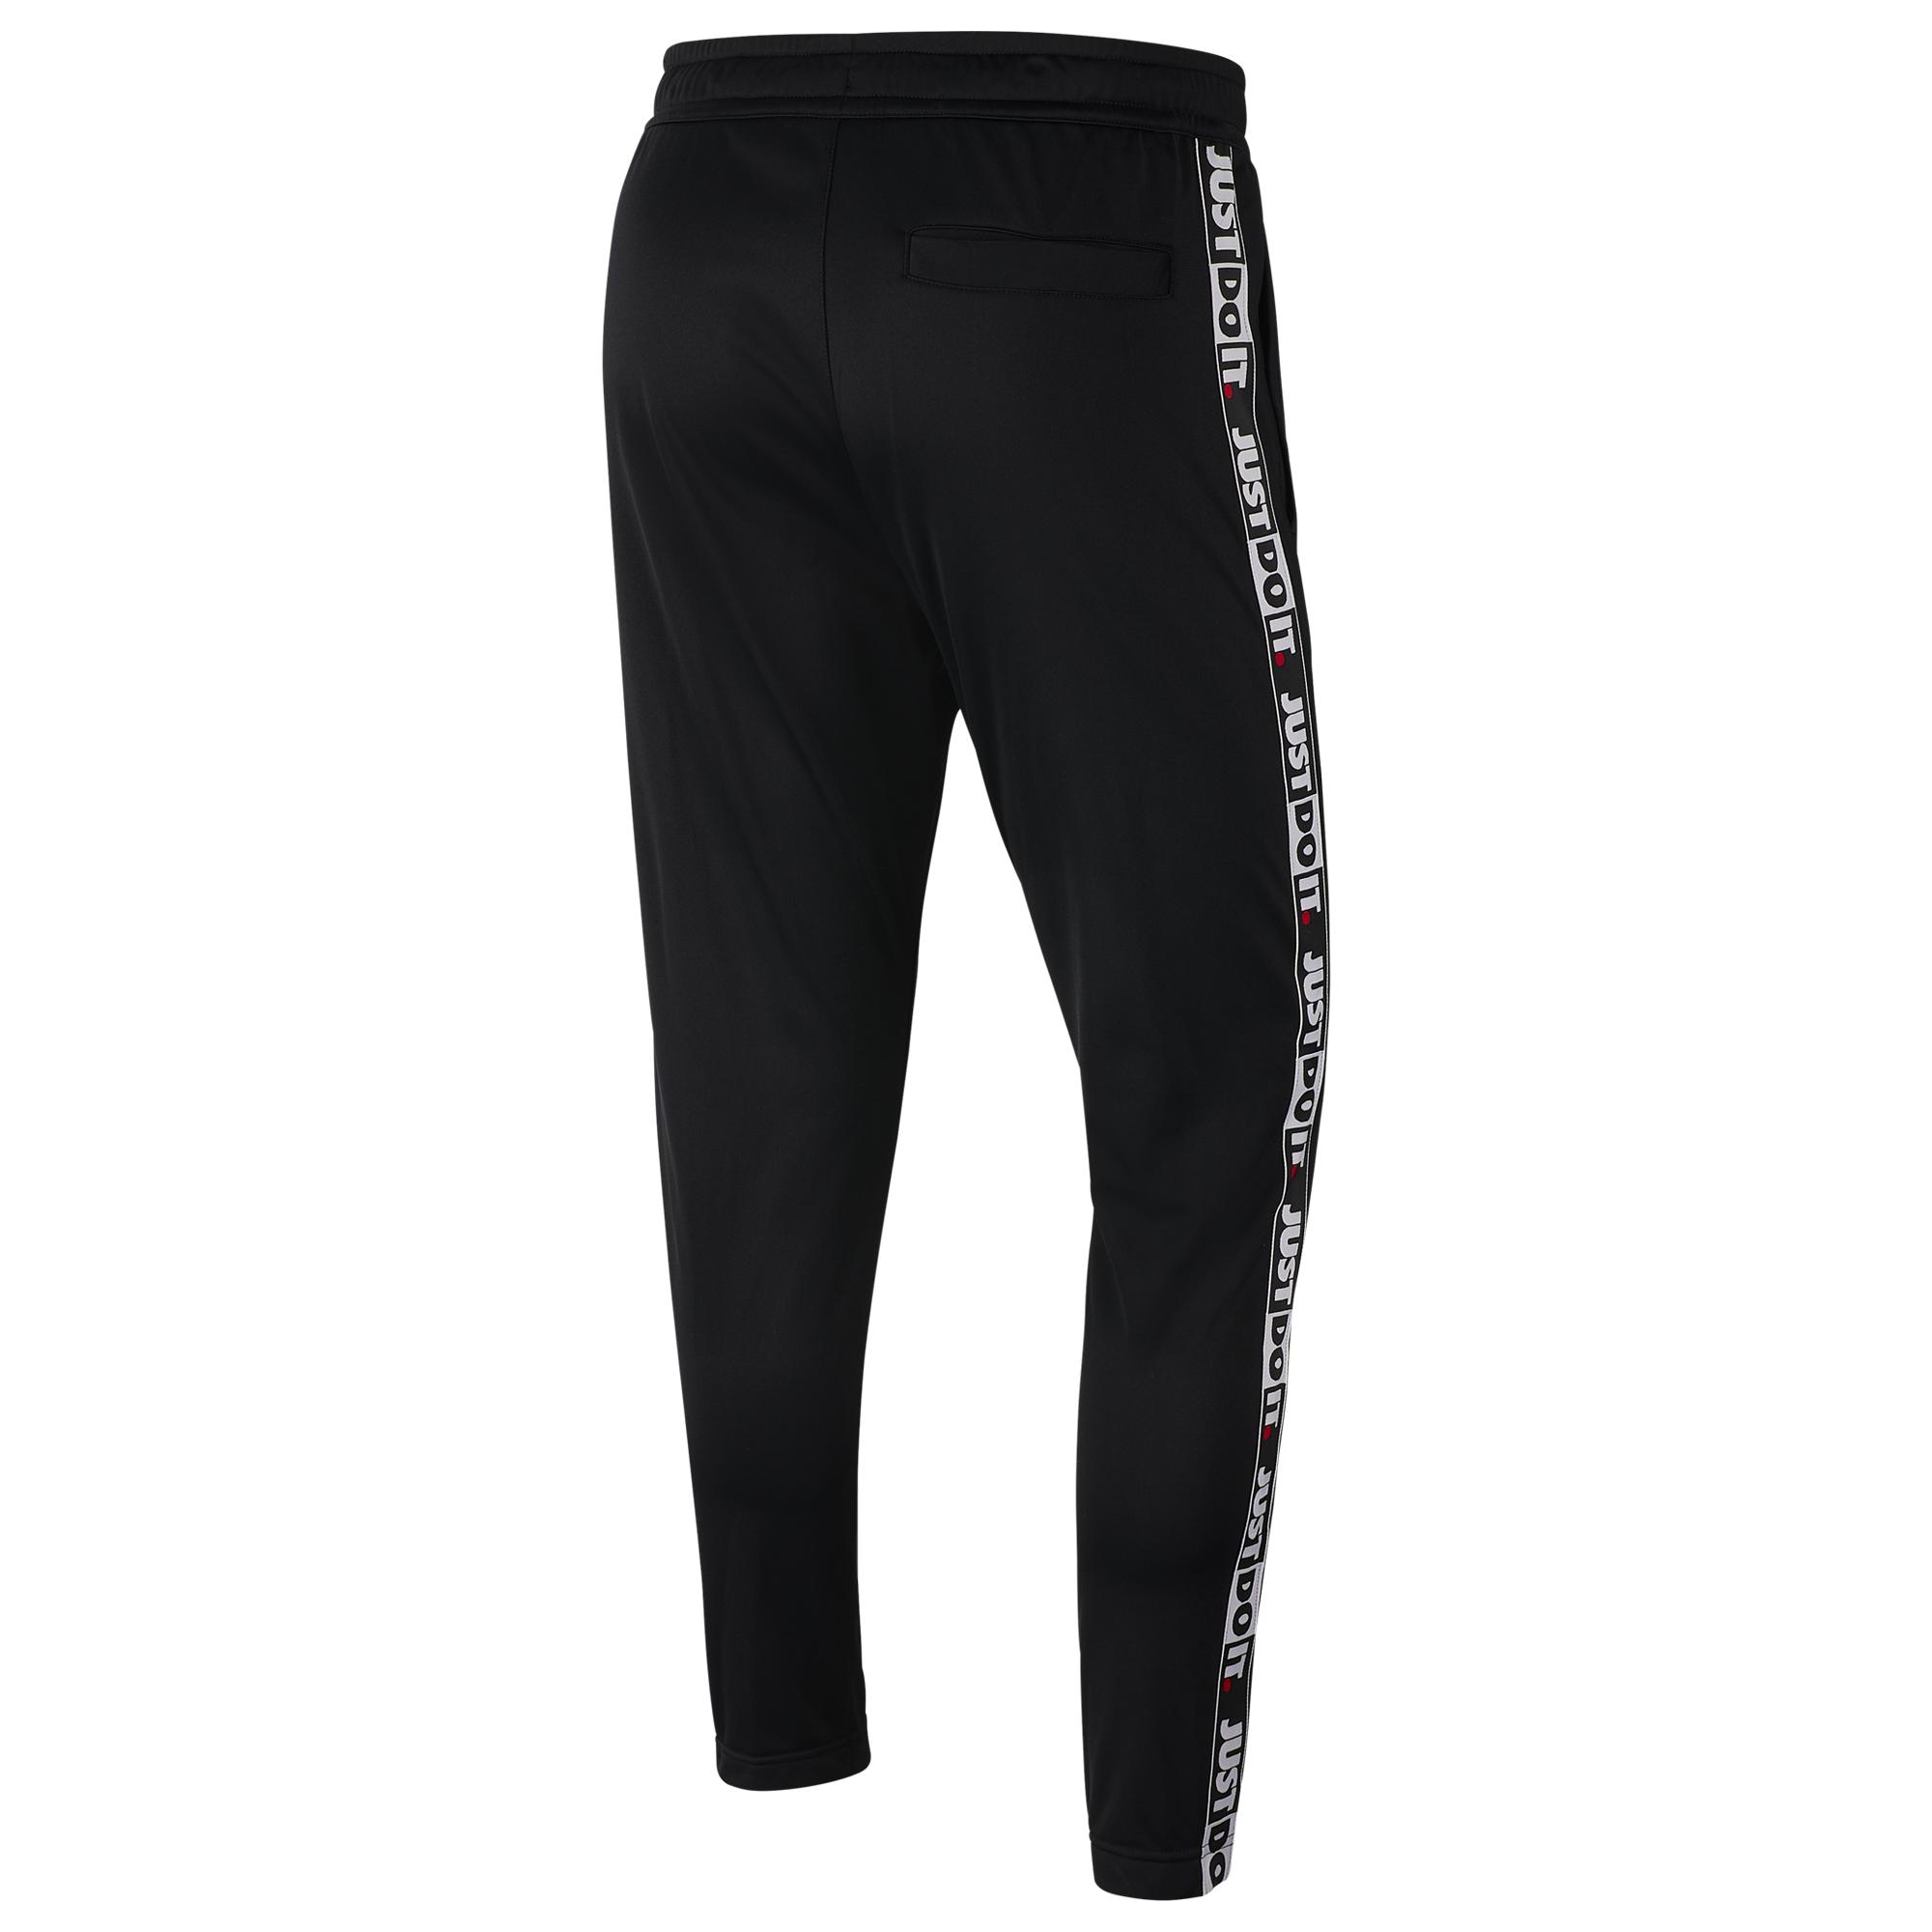 Nike Synthetic Jdi Tape Pants in Black for Men - Lyst